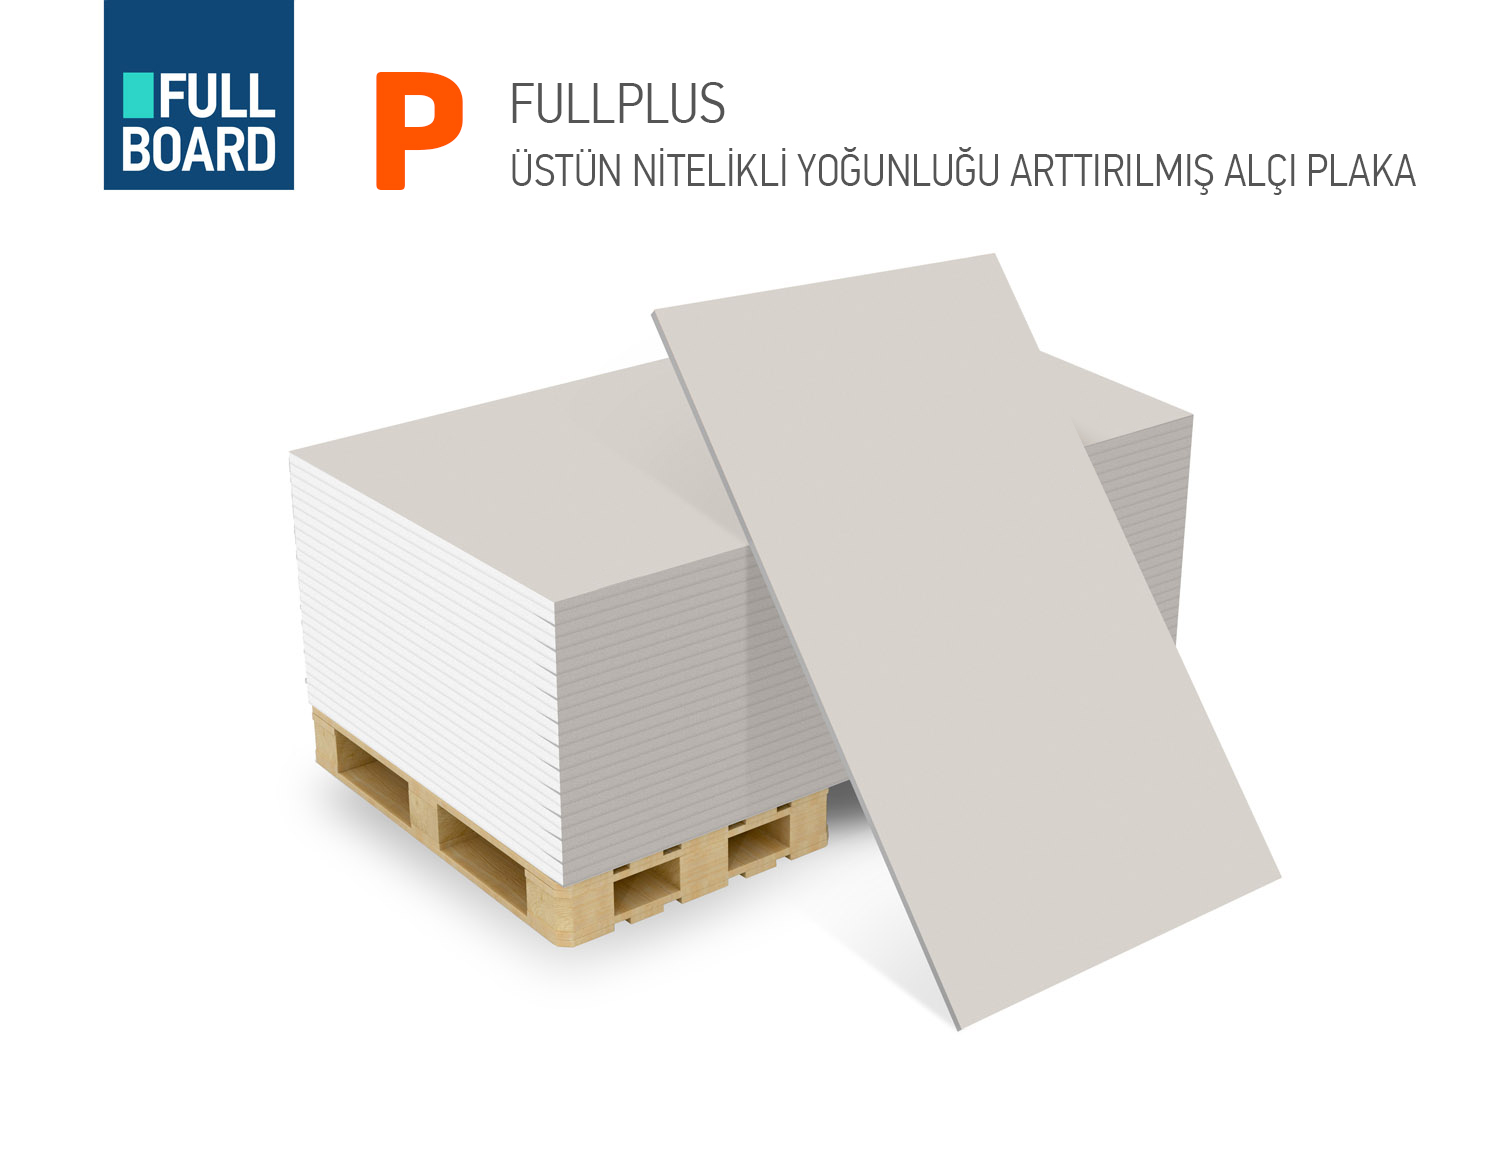 Fullboard FULLPLUS